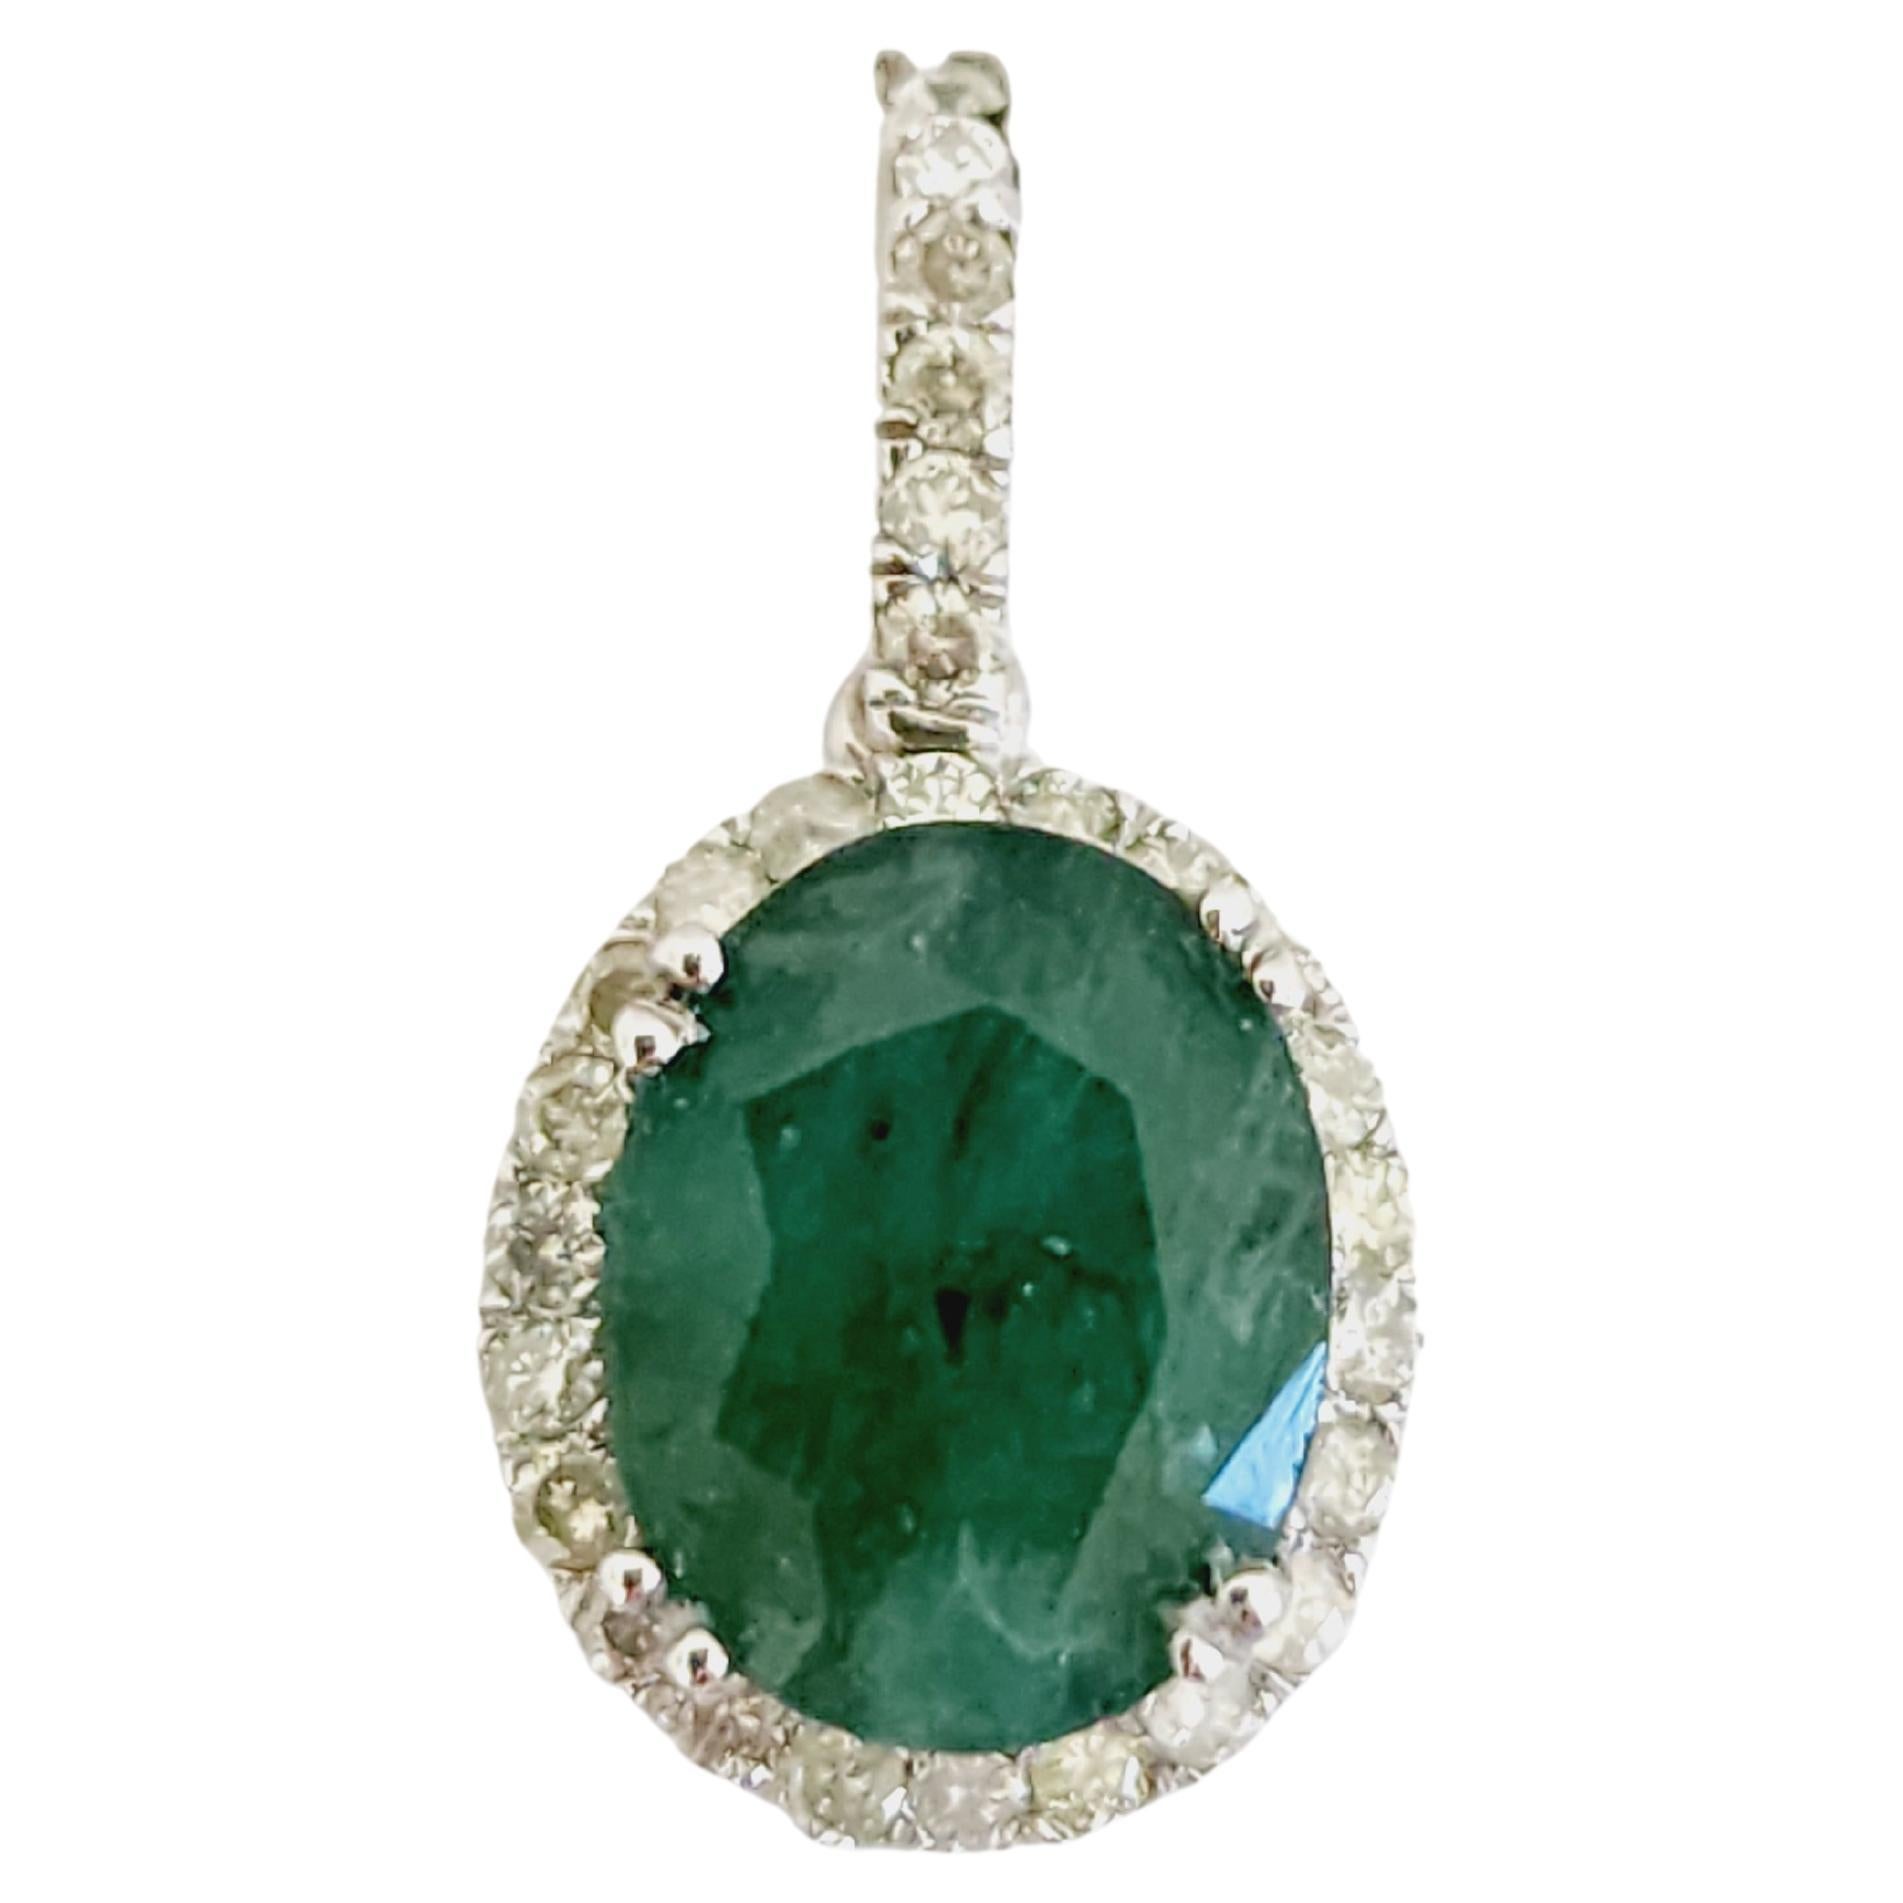 2.82 Carats Natural Emerald Diamond Pendant White Gold 14 Karat